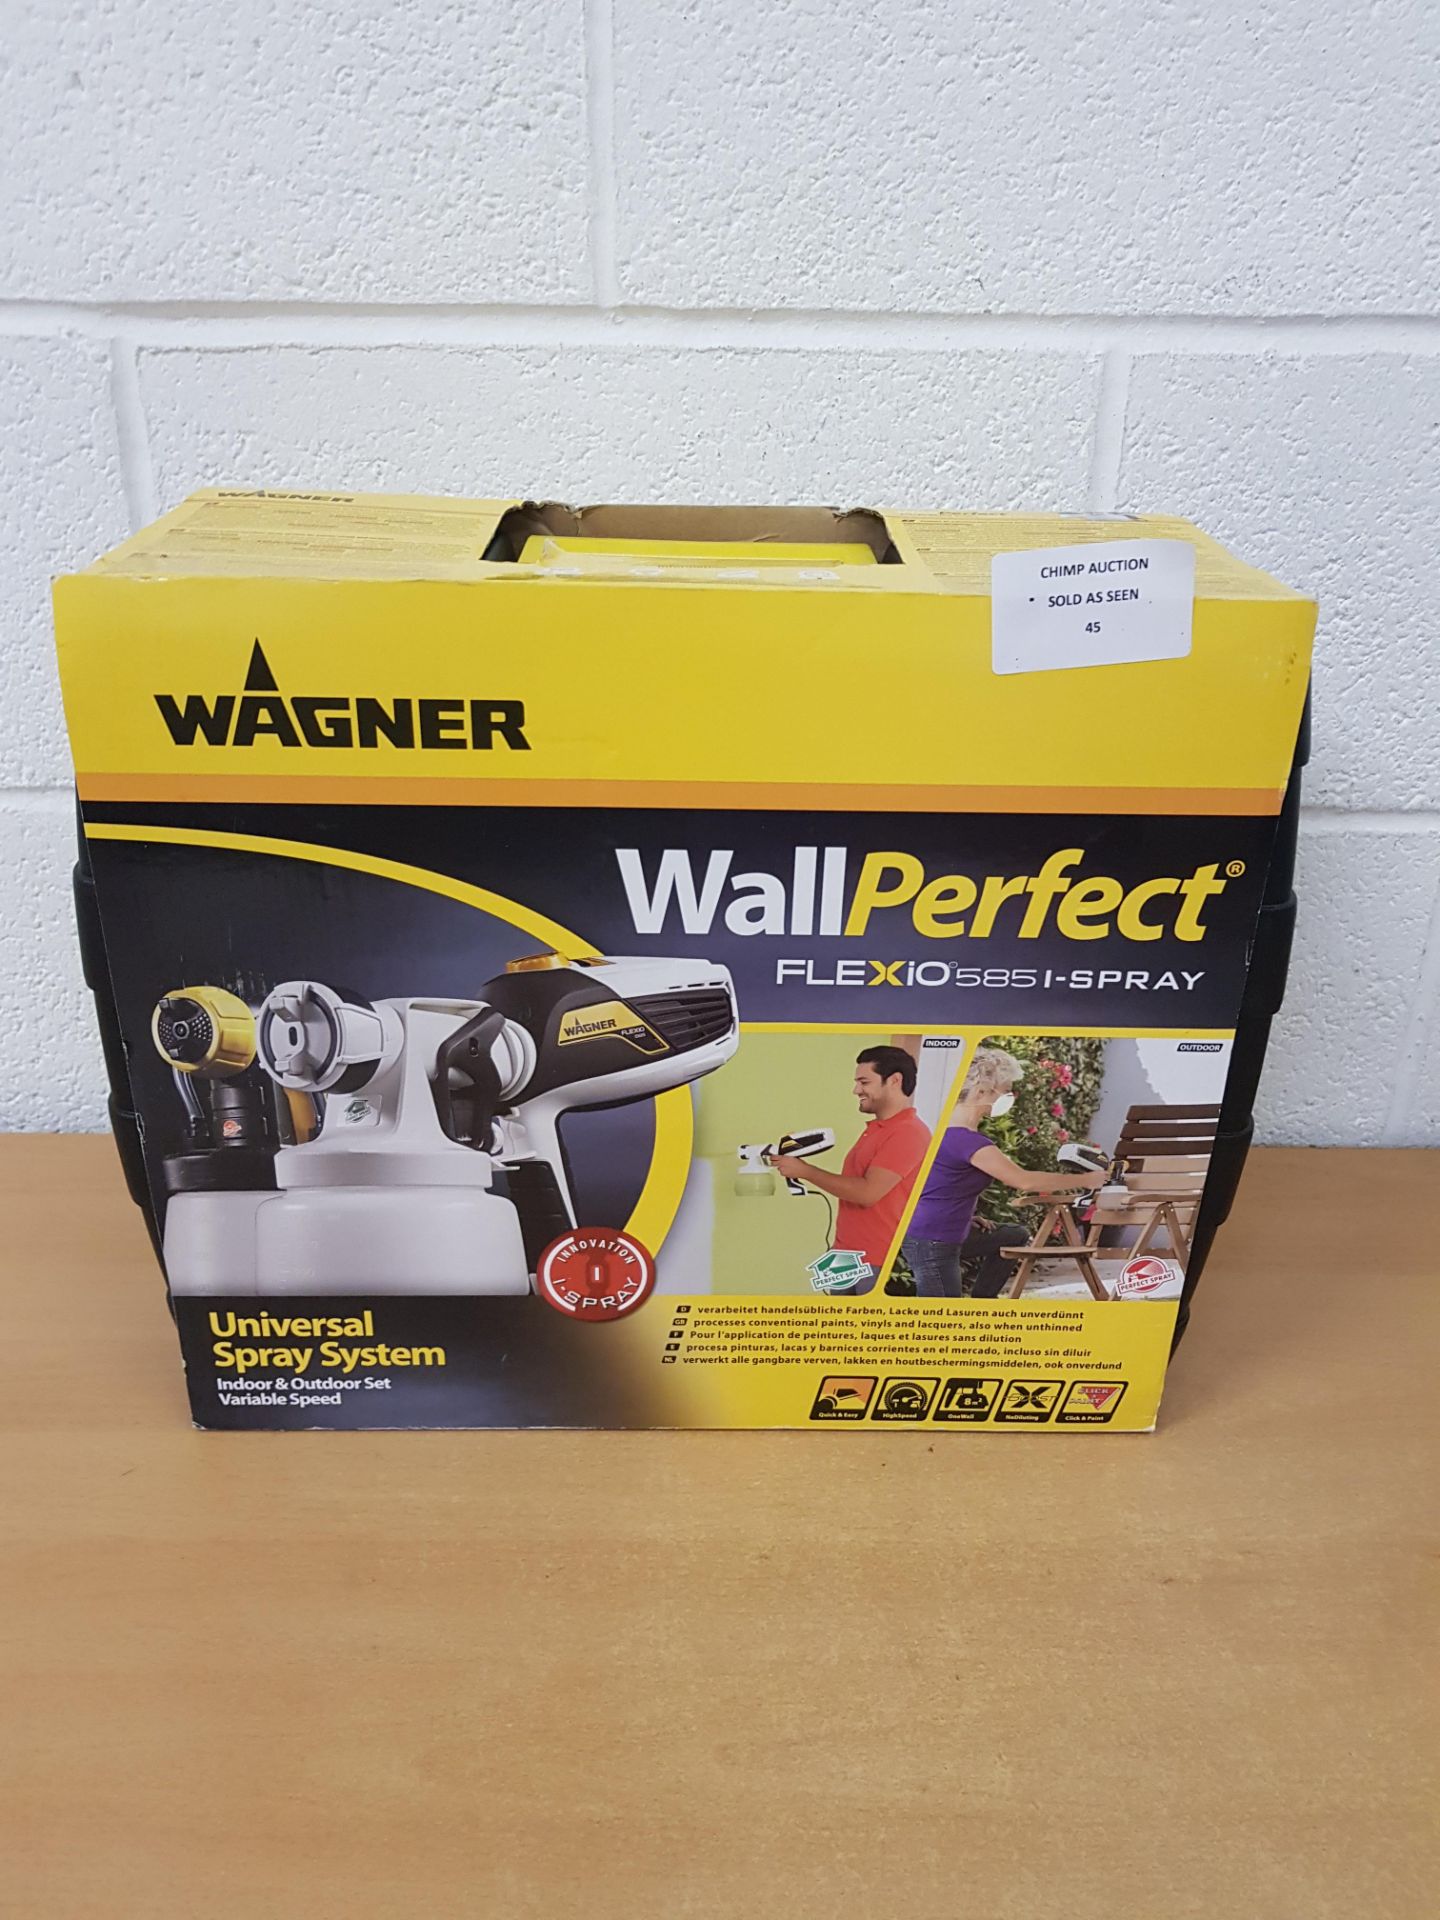 Wagner WallPerfect Flexio 585 I-Spray Universal Spray System RRP £129.99